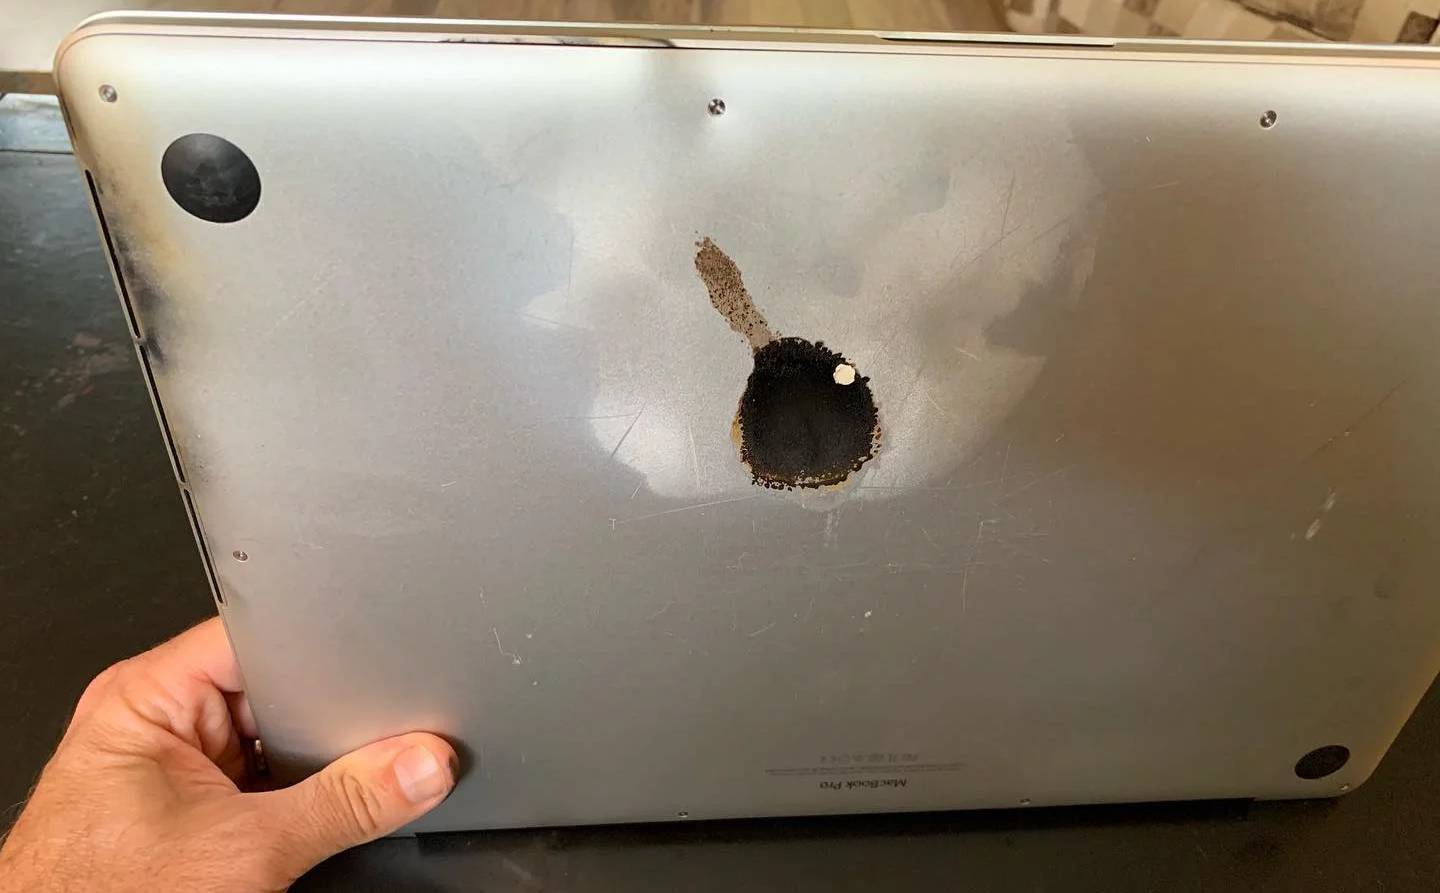 macbook pro 15 tums batteri exploderade